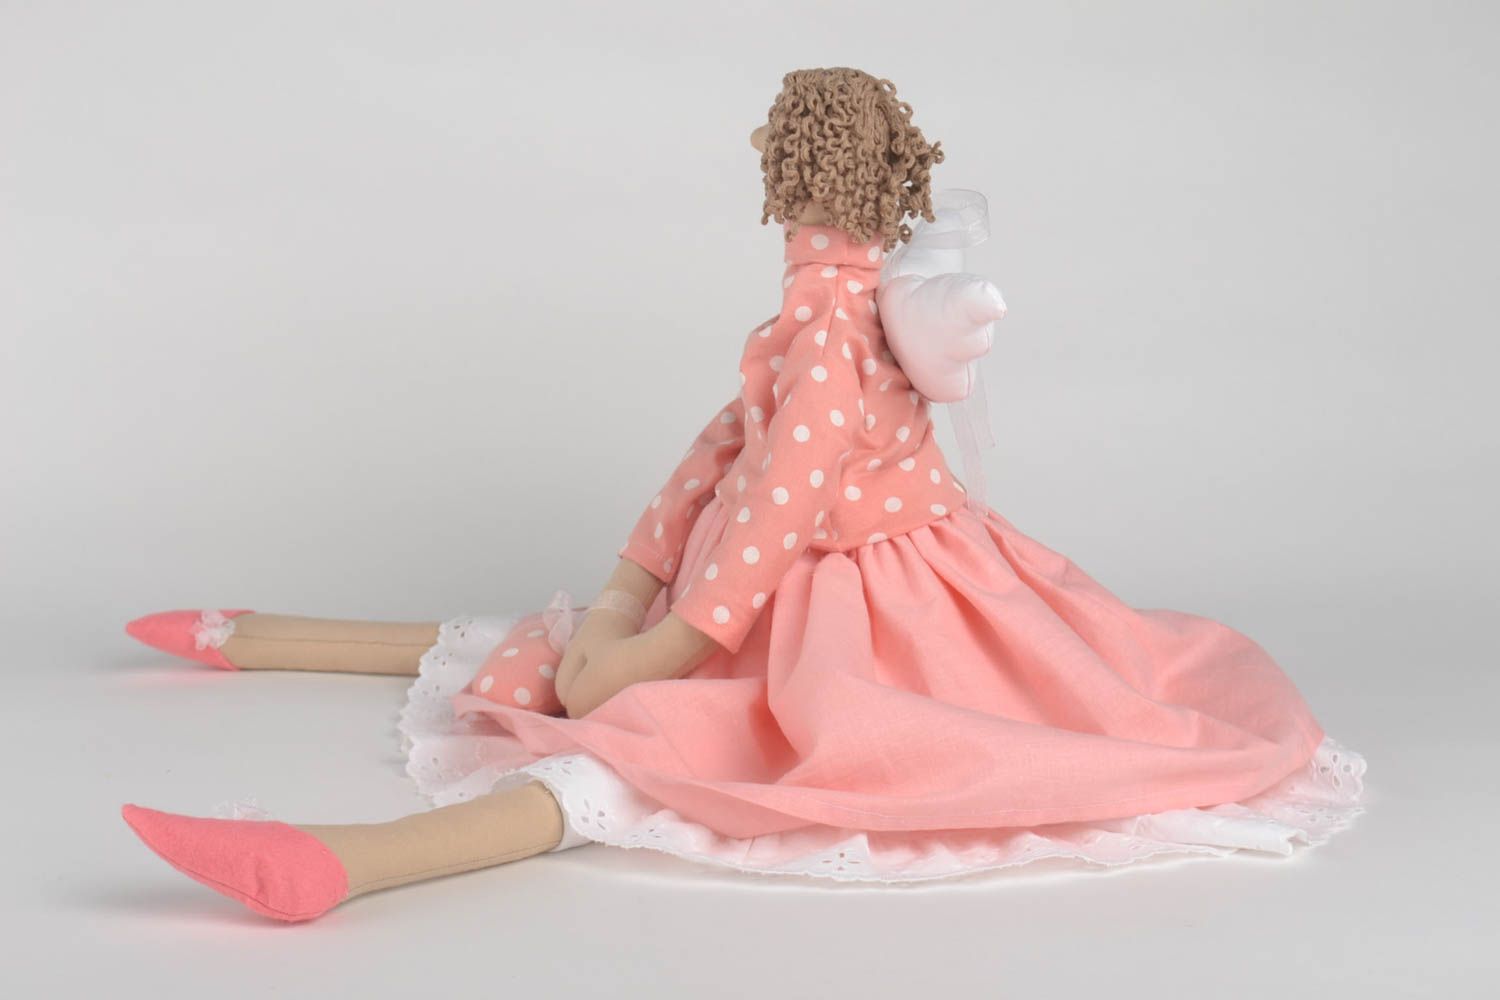 Unusual handmade rag doll decorative soft toy stuffed toy room decor ideas photo 3